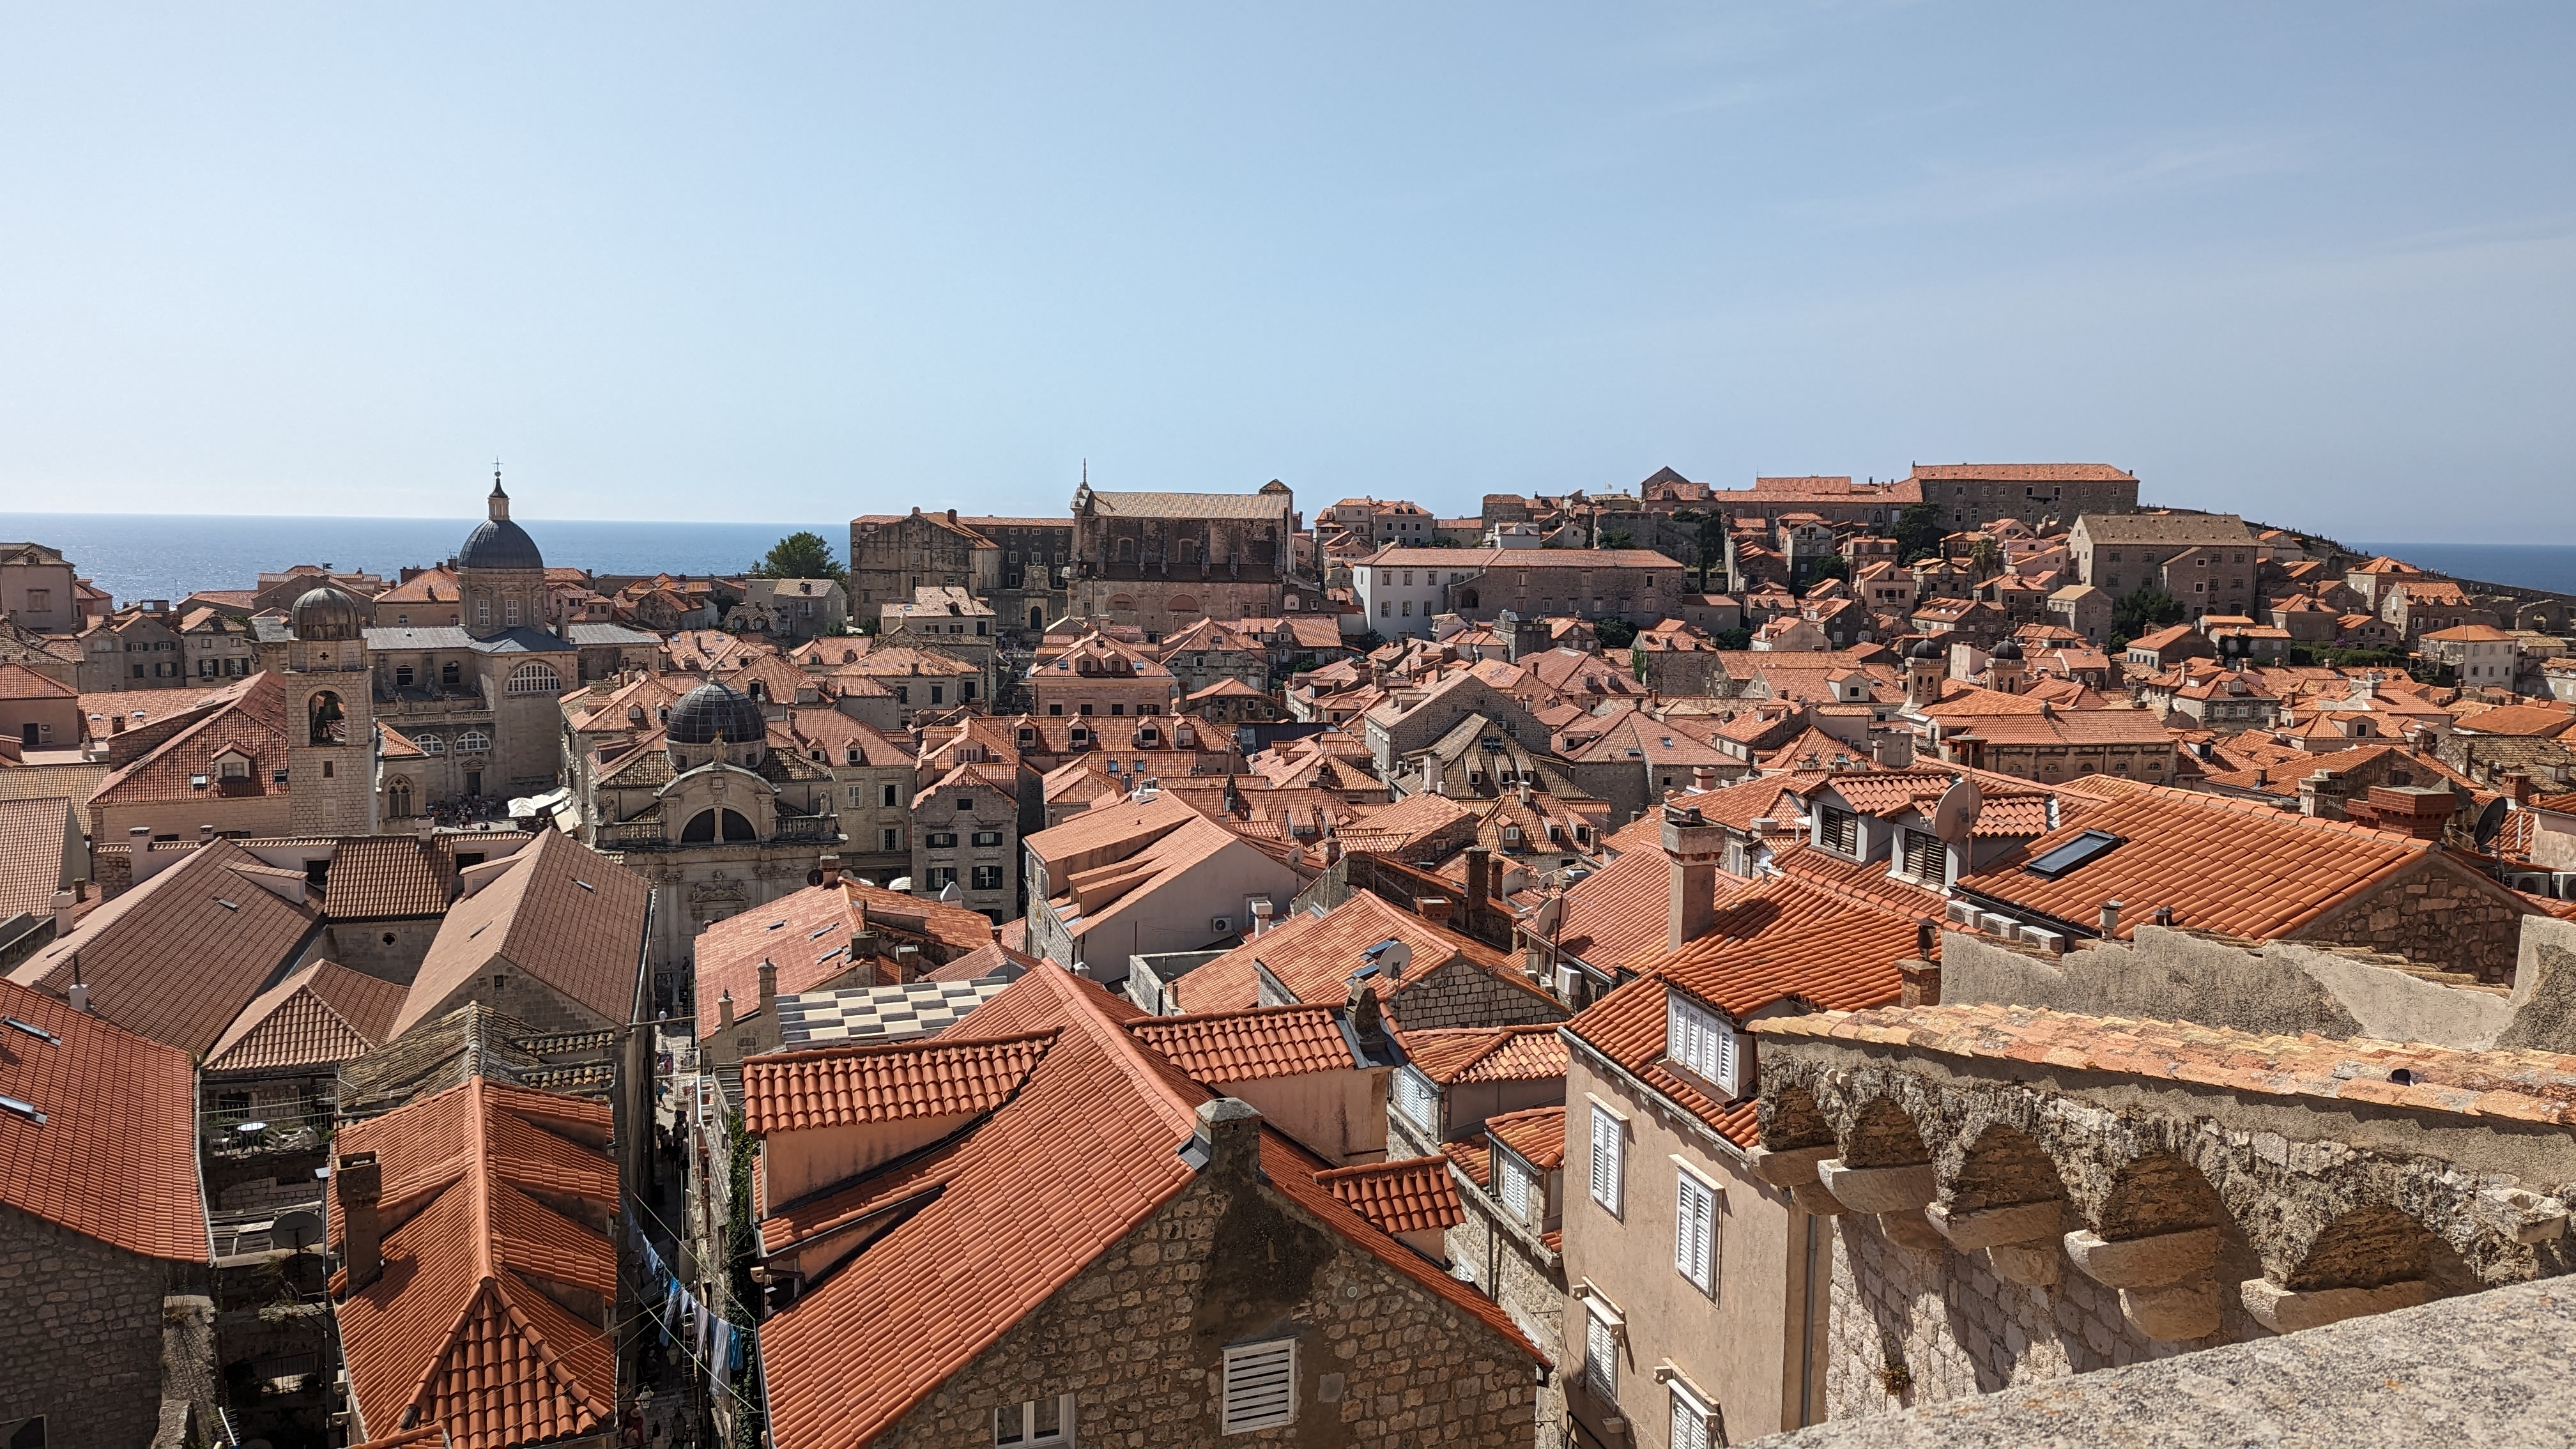 Dubrovnik Rooftops Village Building Cityscape 4032x2268